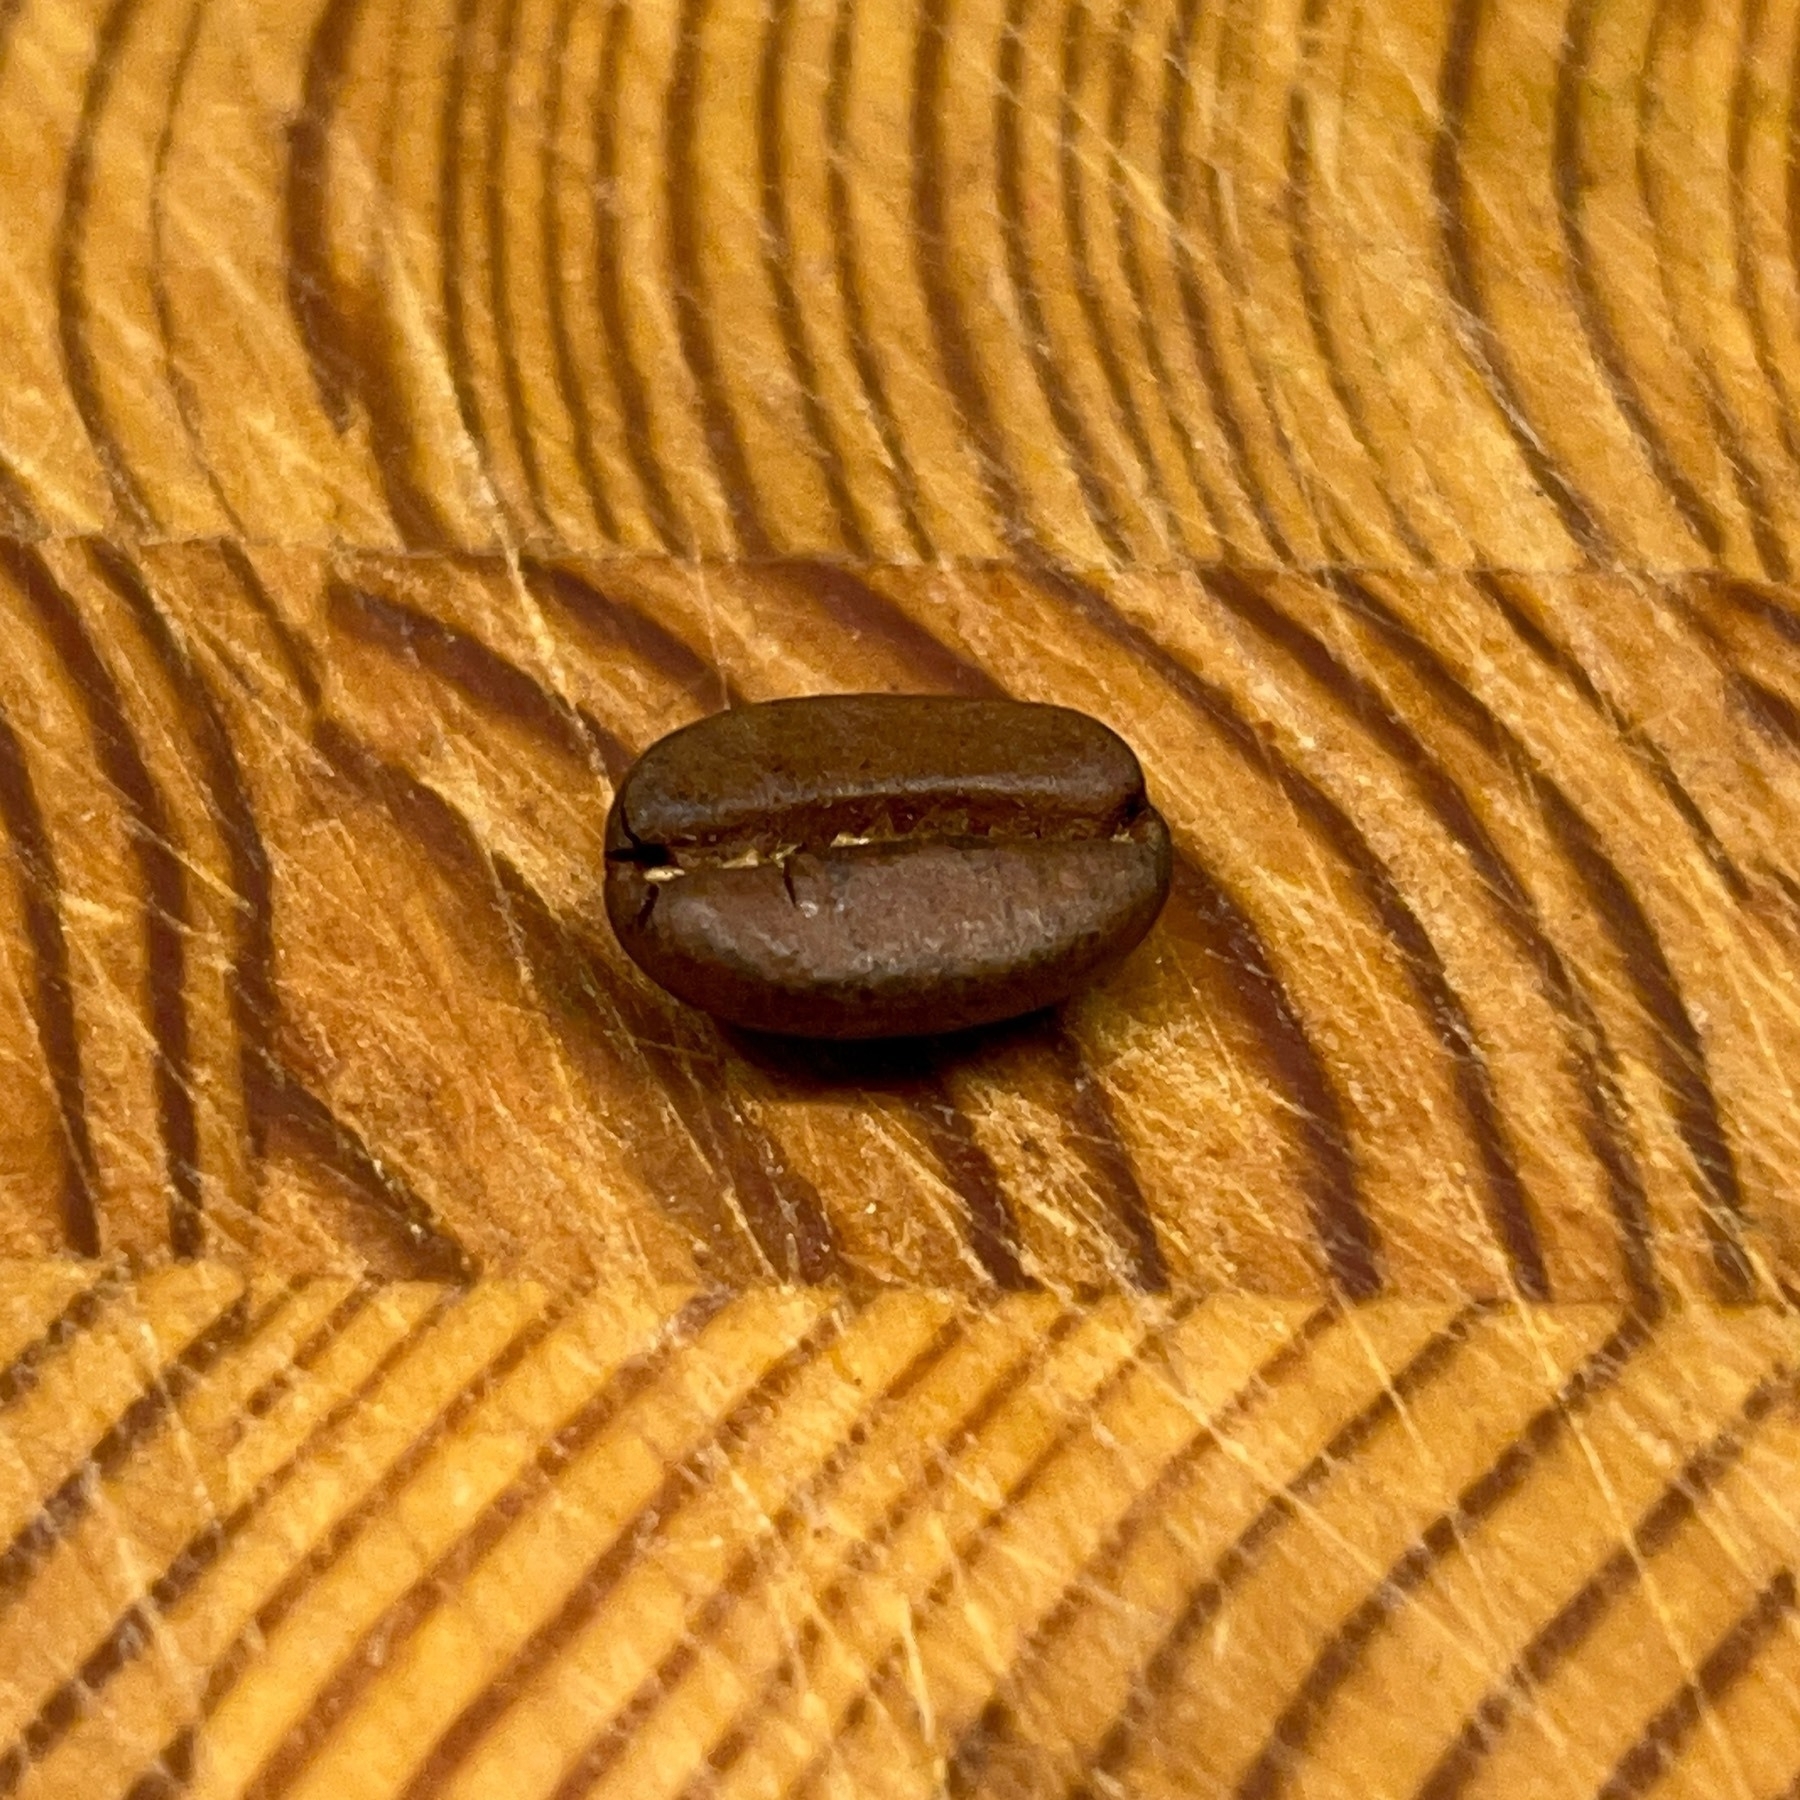 A singled roasted coffee bean on a wood grain cutting board. 